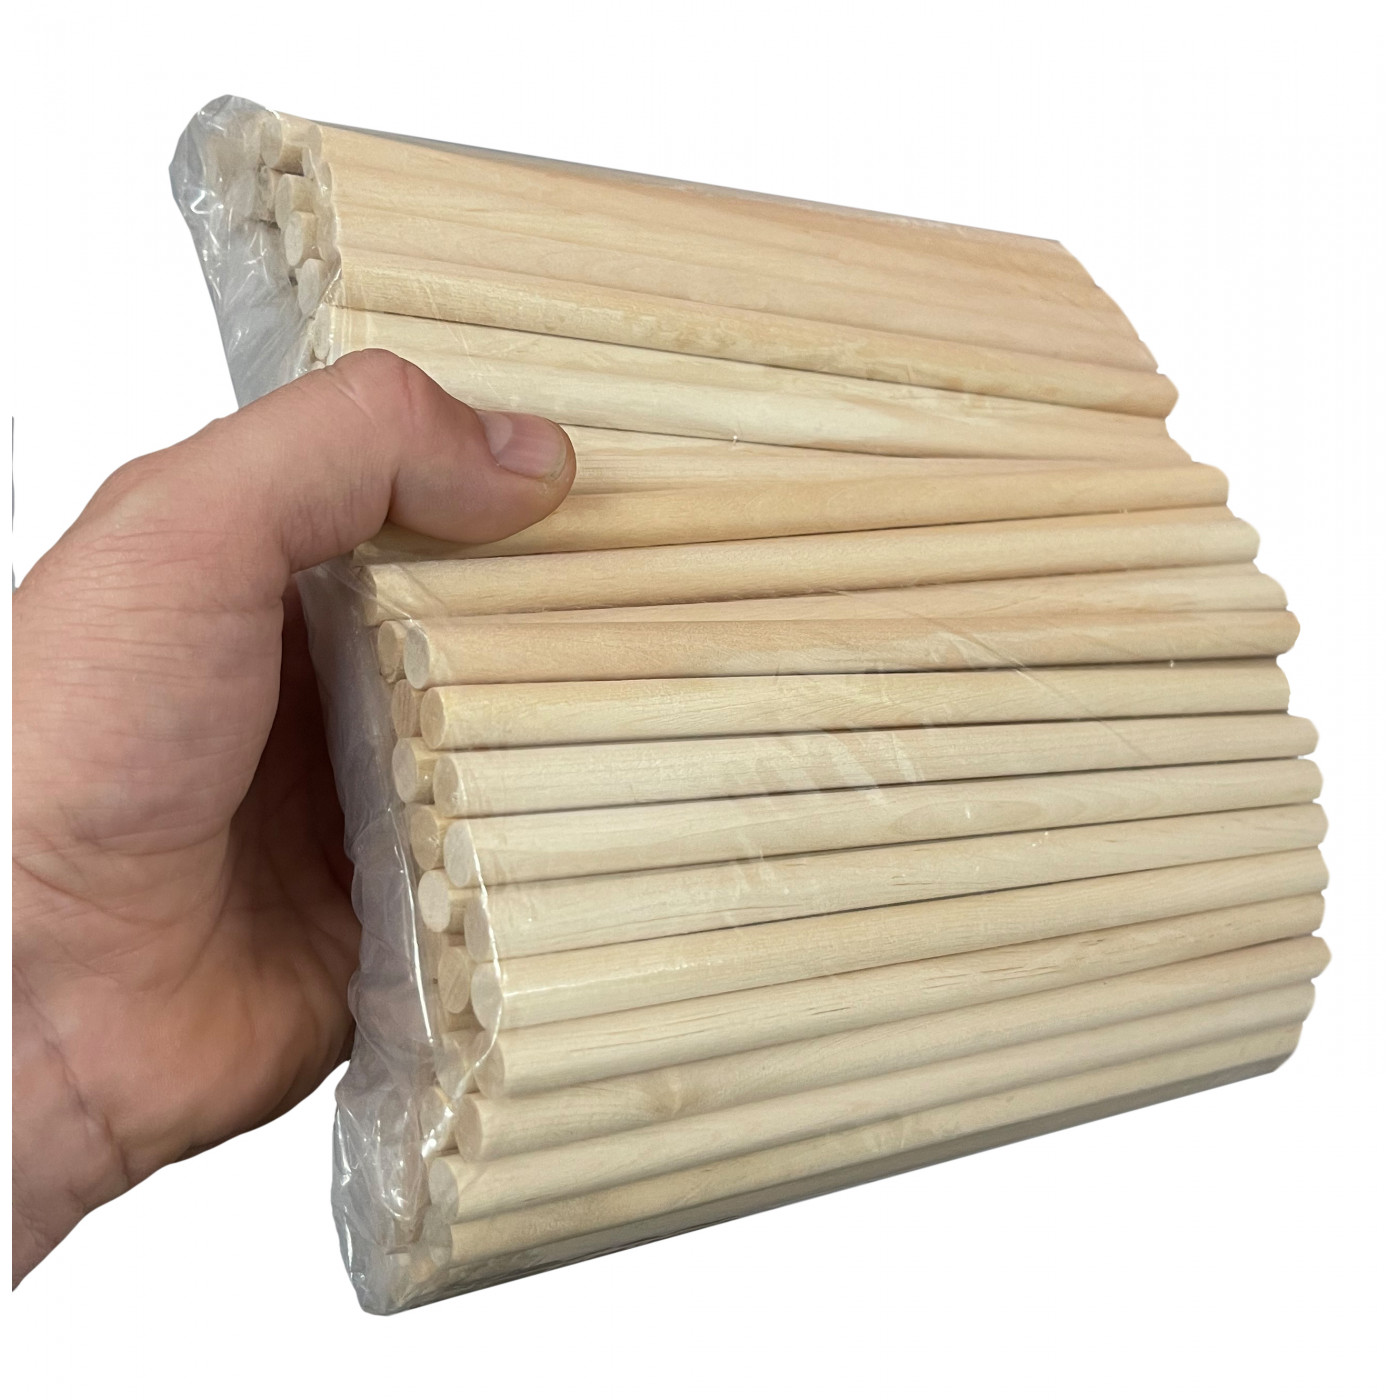 https://www.woodtoolsanddeco.com/11494-large_default/set-of-100-wooden-sticks-30-cm-length-10-mm-dia-birchwood.jpg